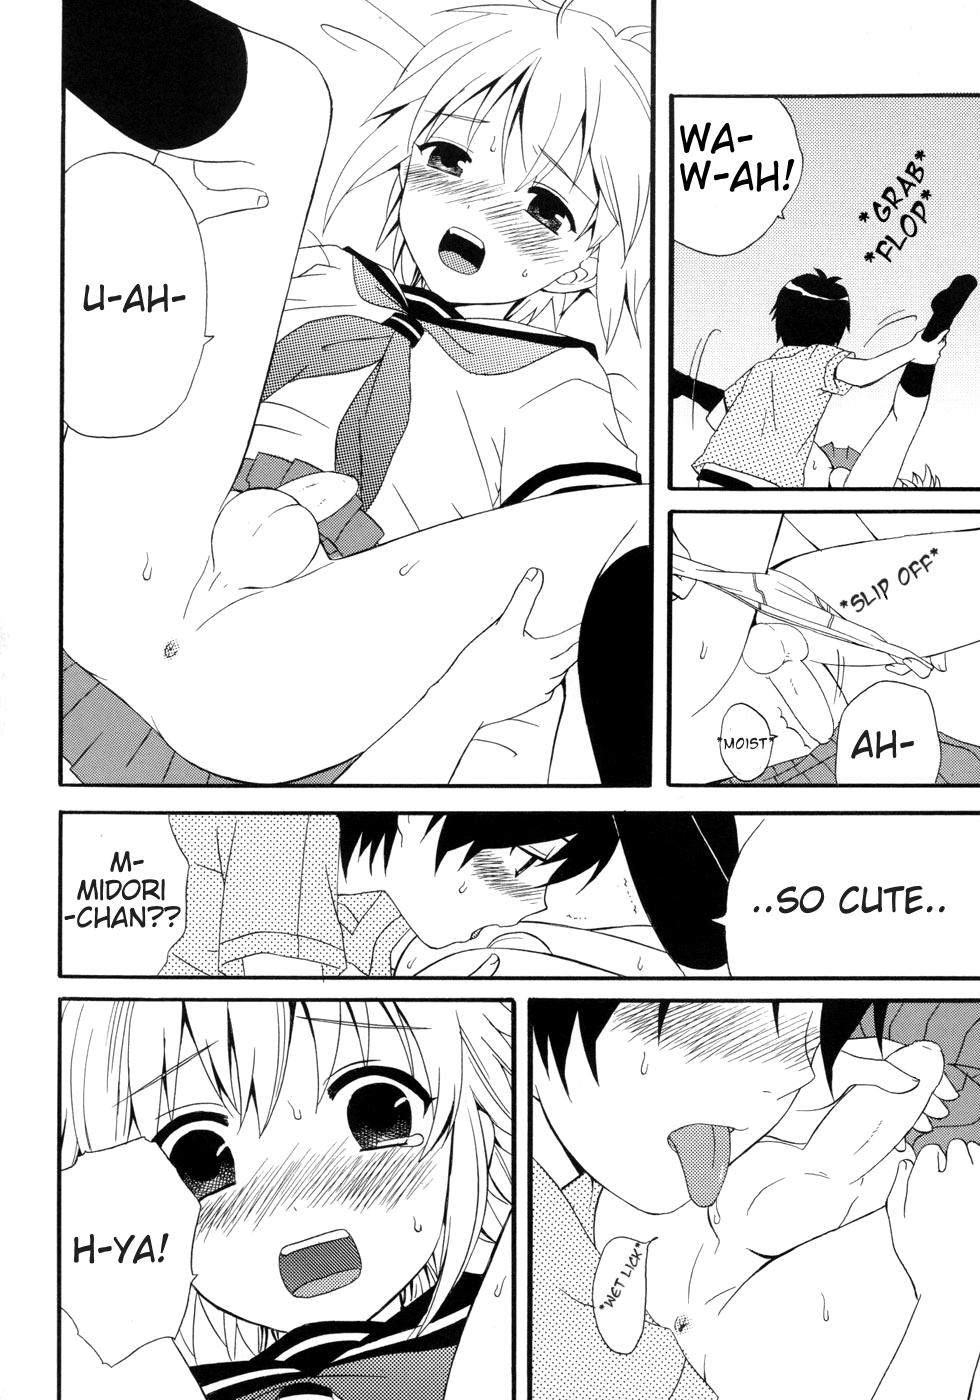 Men Teach Me! Midori-chan! Off - Page 10